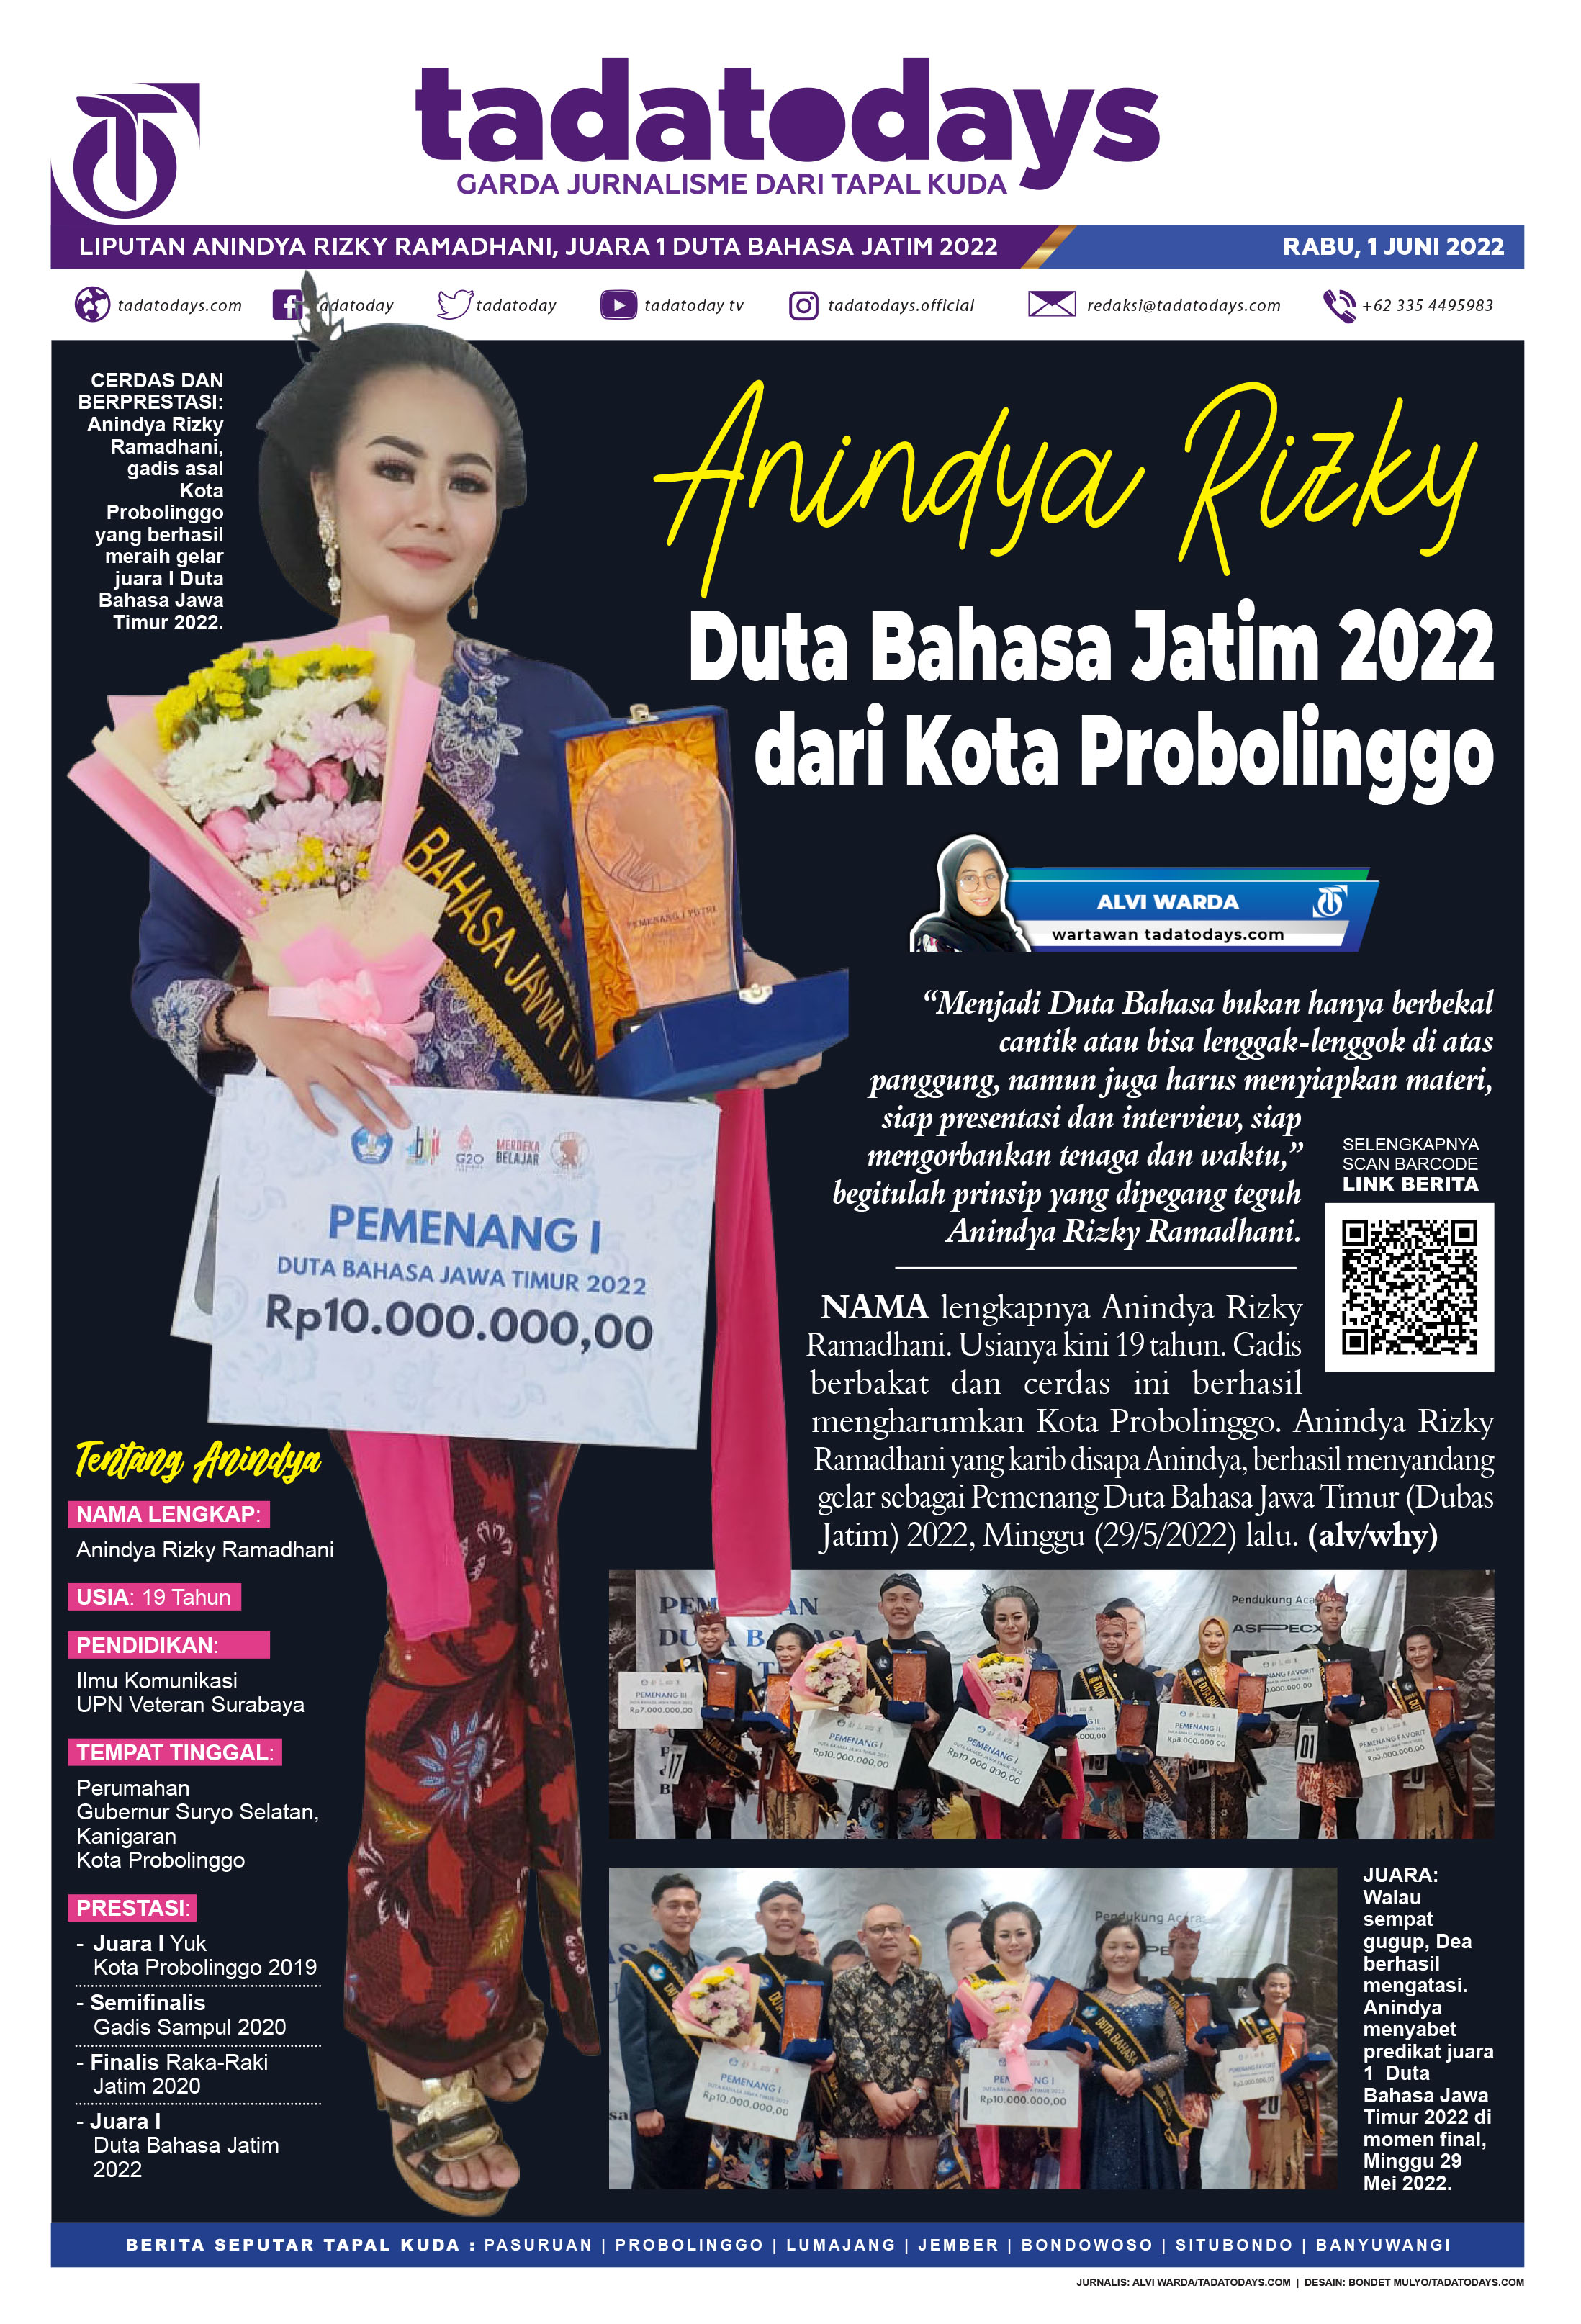 Anindya Rizky, Duta Bahasa Jatim 2022 asal Kota Probolinggo